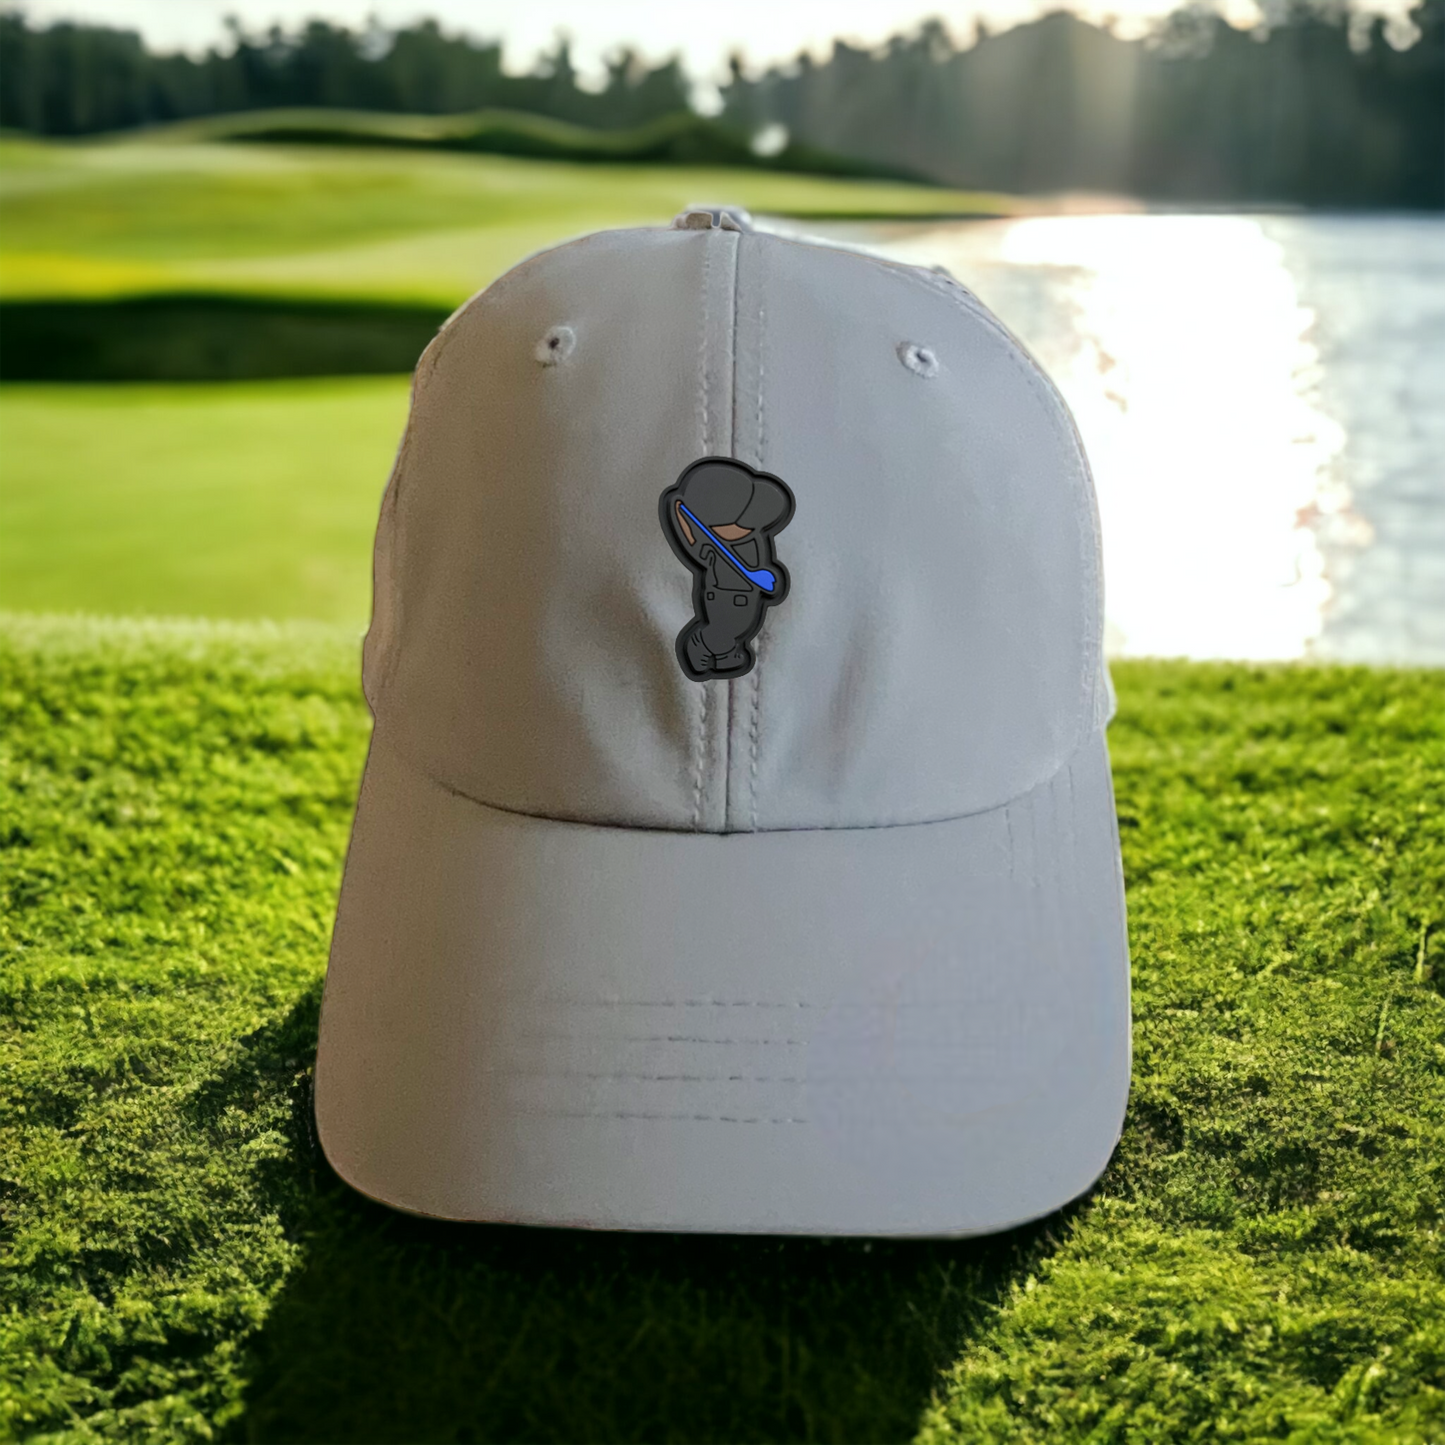 Golfer Bro (PVC Logo) Unstructured Low Profile Performance Cap